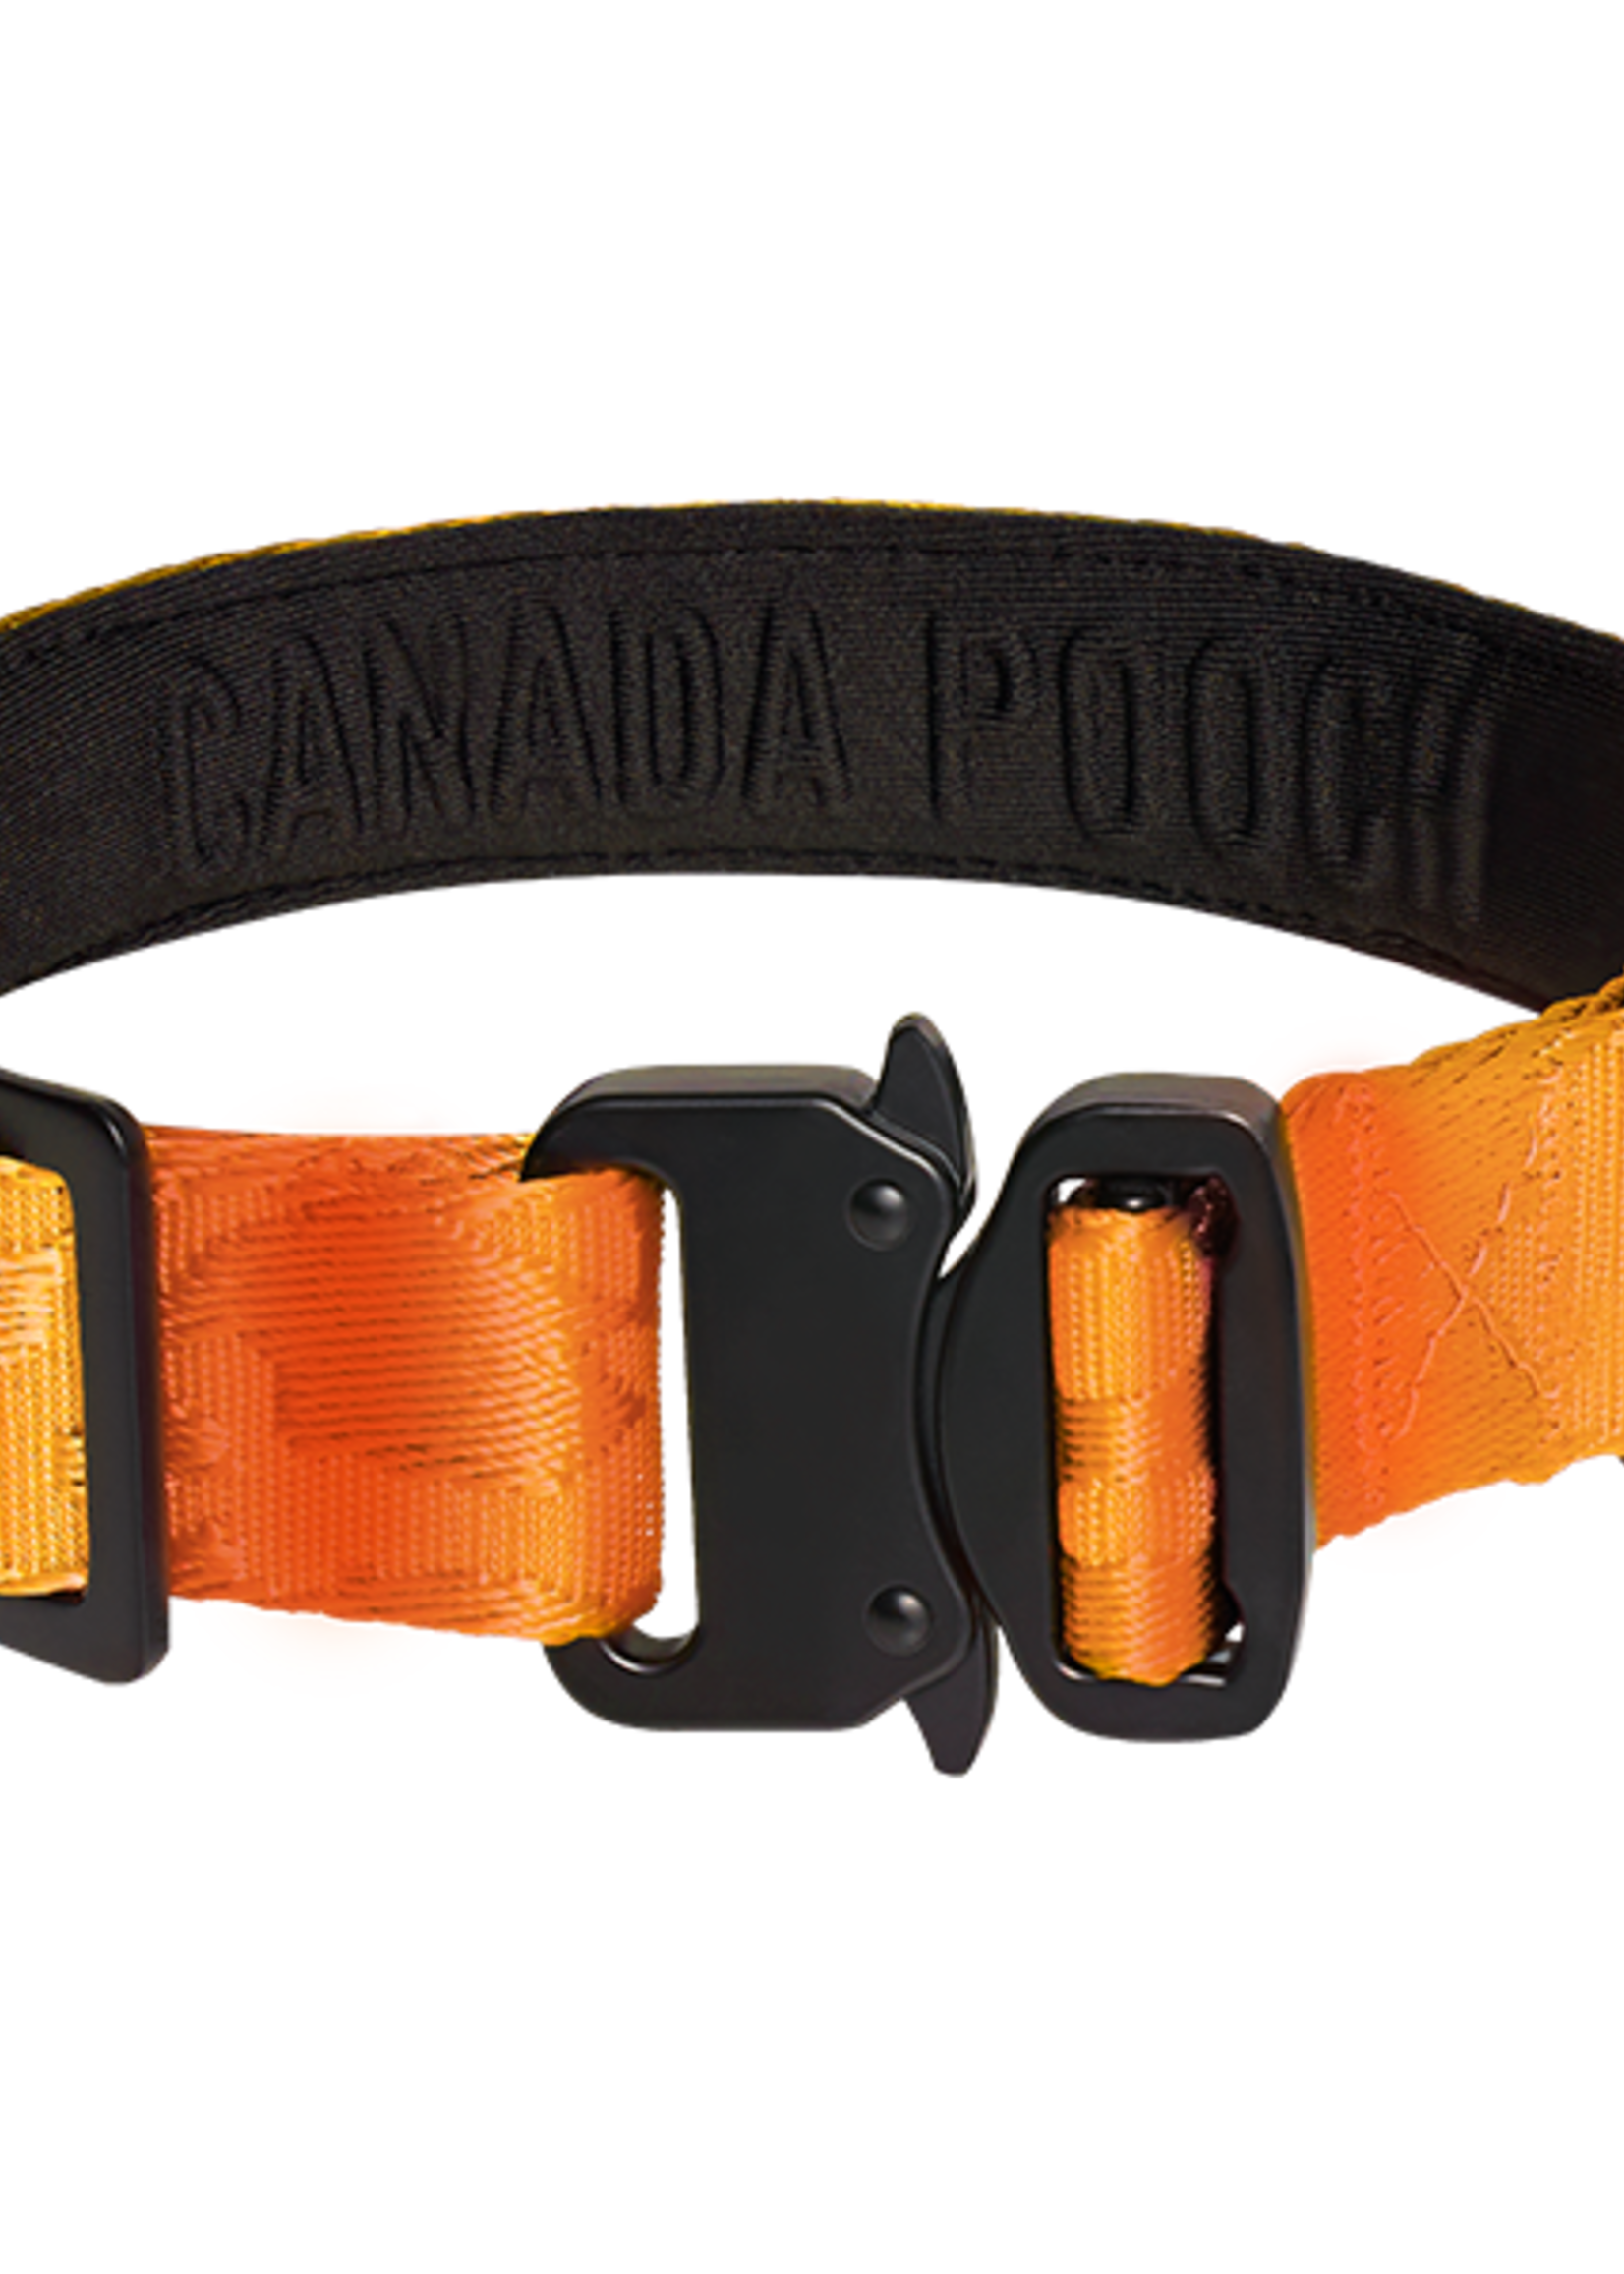 Canada Pooch Core Utility Collar Orange Camo M